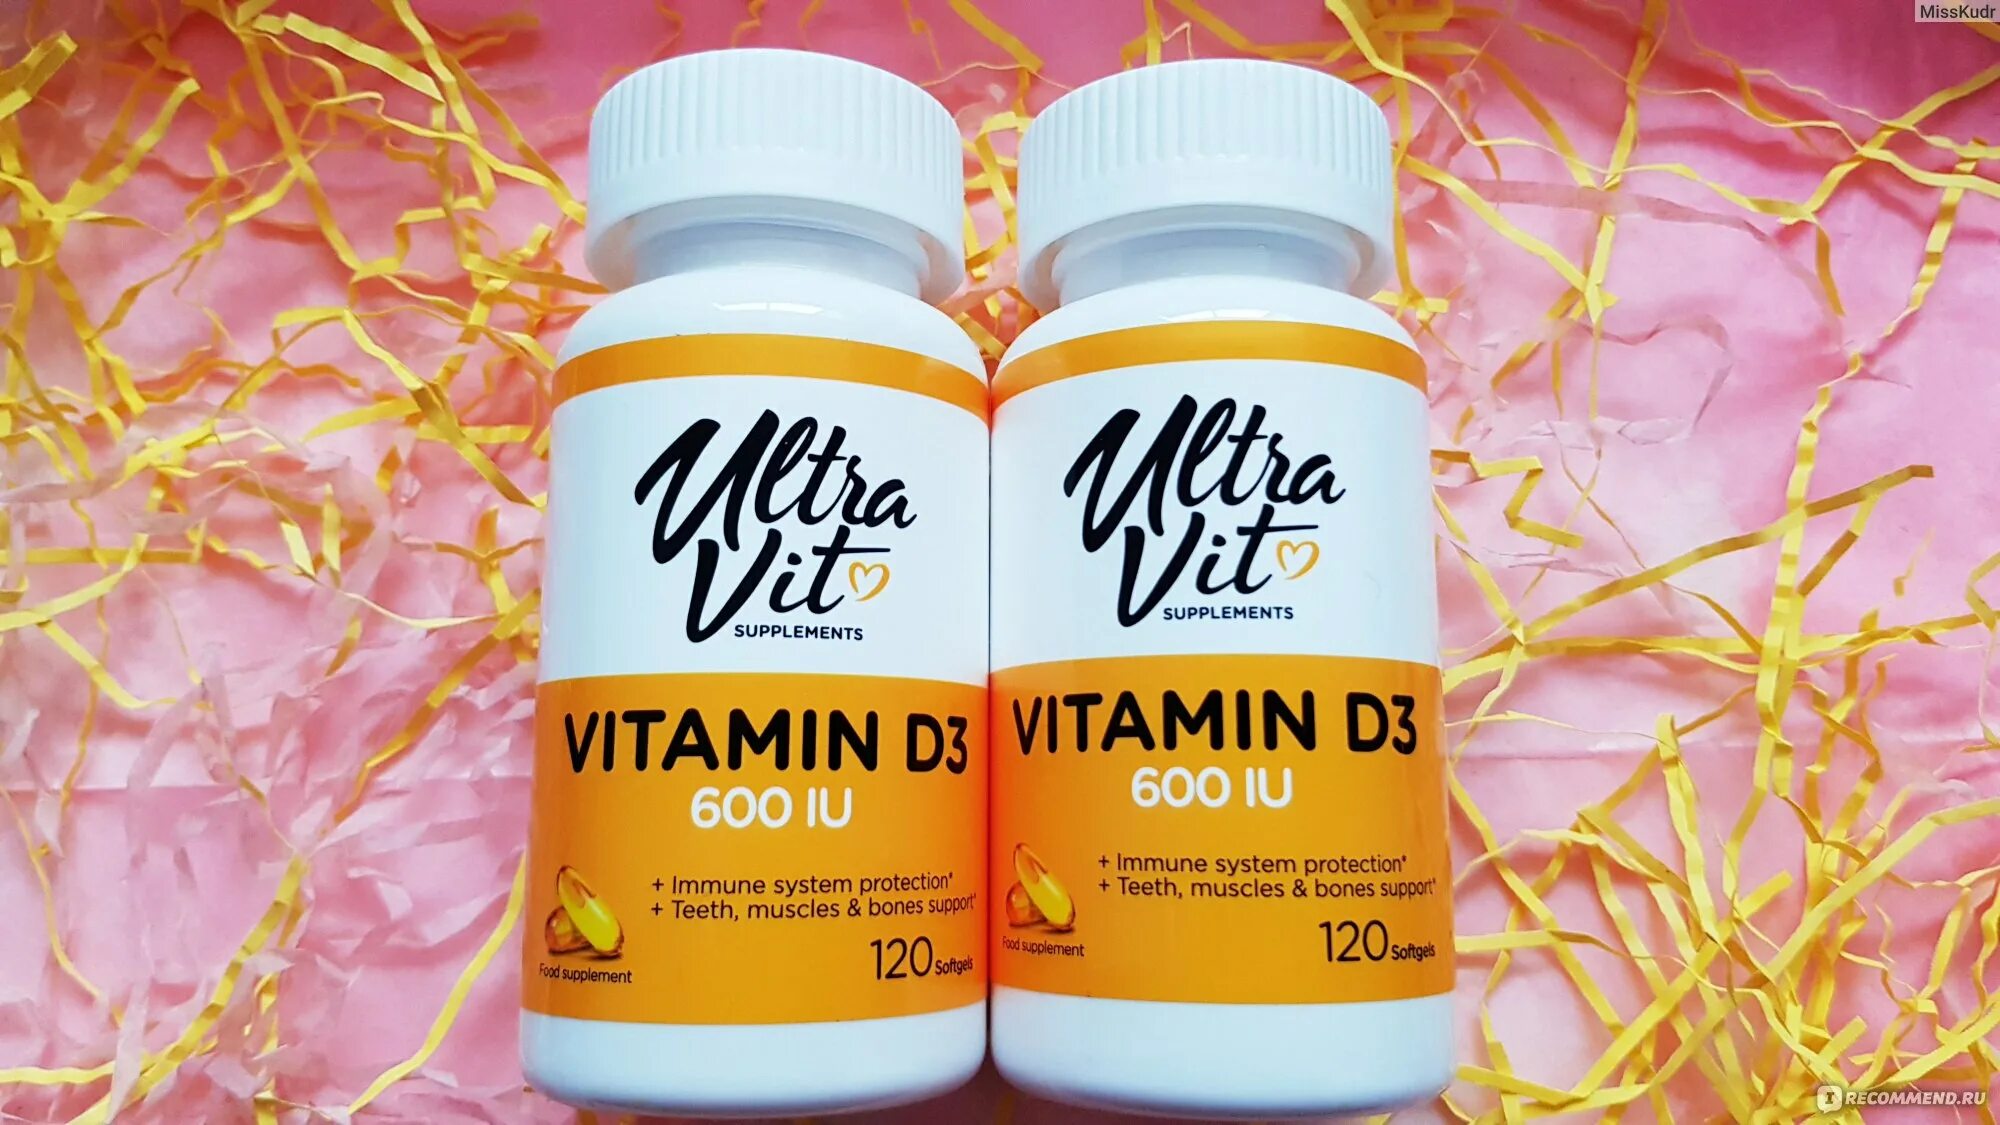 Ultravit vitamin. Ultravit Vitamin d3. Ультра вит витамин д3. Ultravit витамин д3 2000 ме. Ultravit Vitamin d3 капсулы 2000.